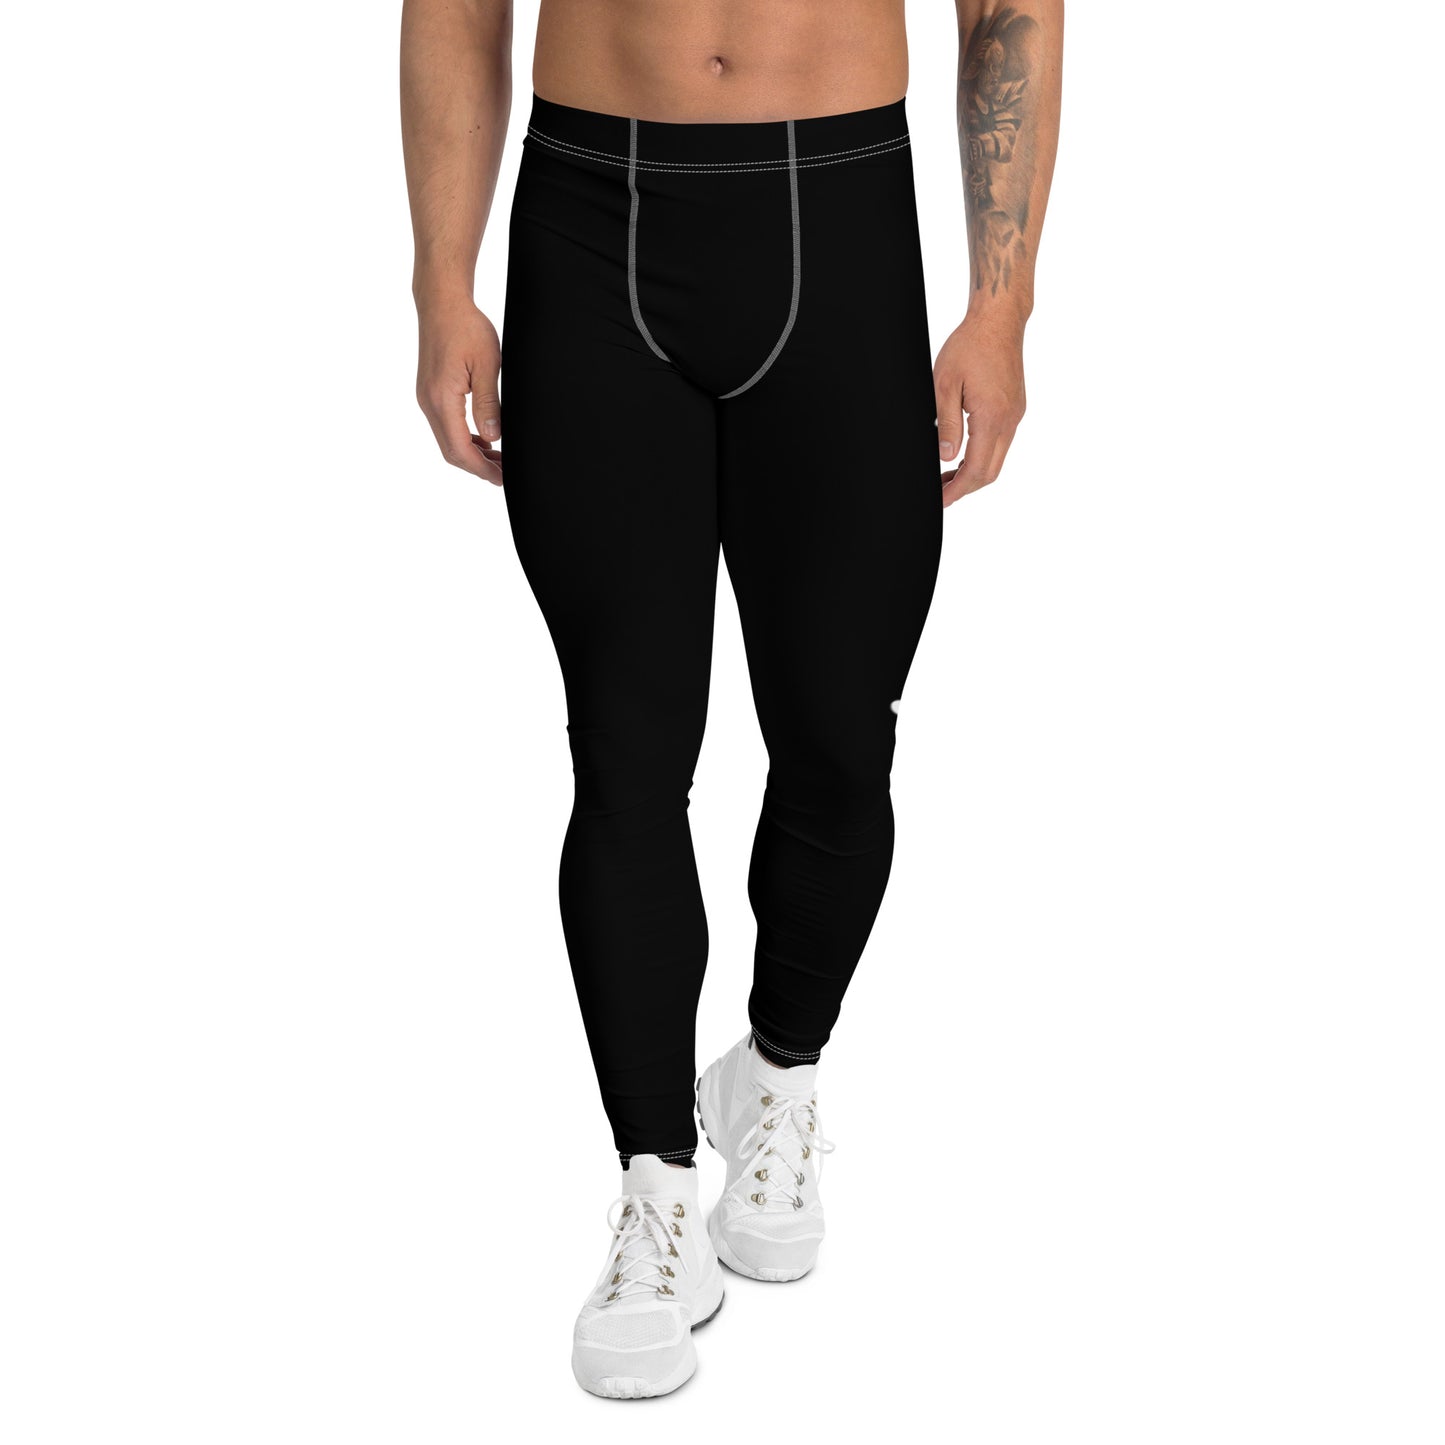 Harlem Boy Collection Athletic Workout Pants - Onyx - Men